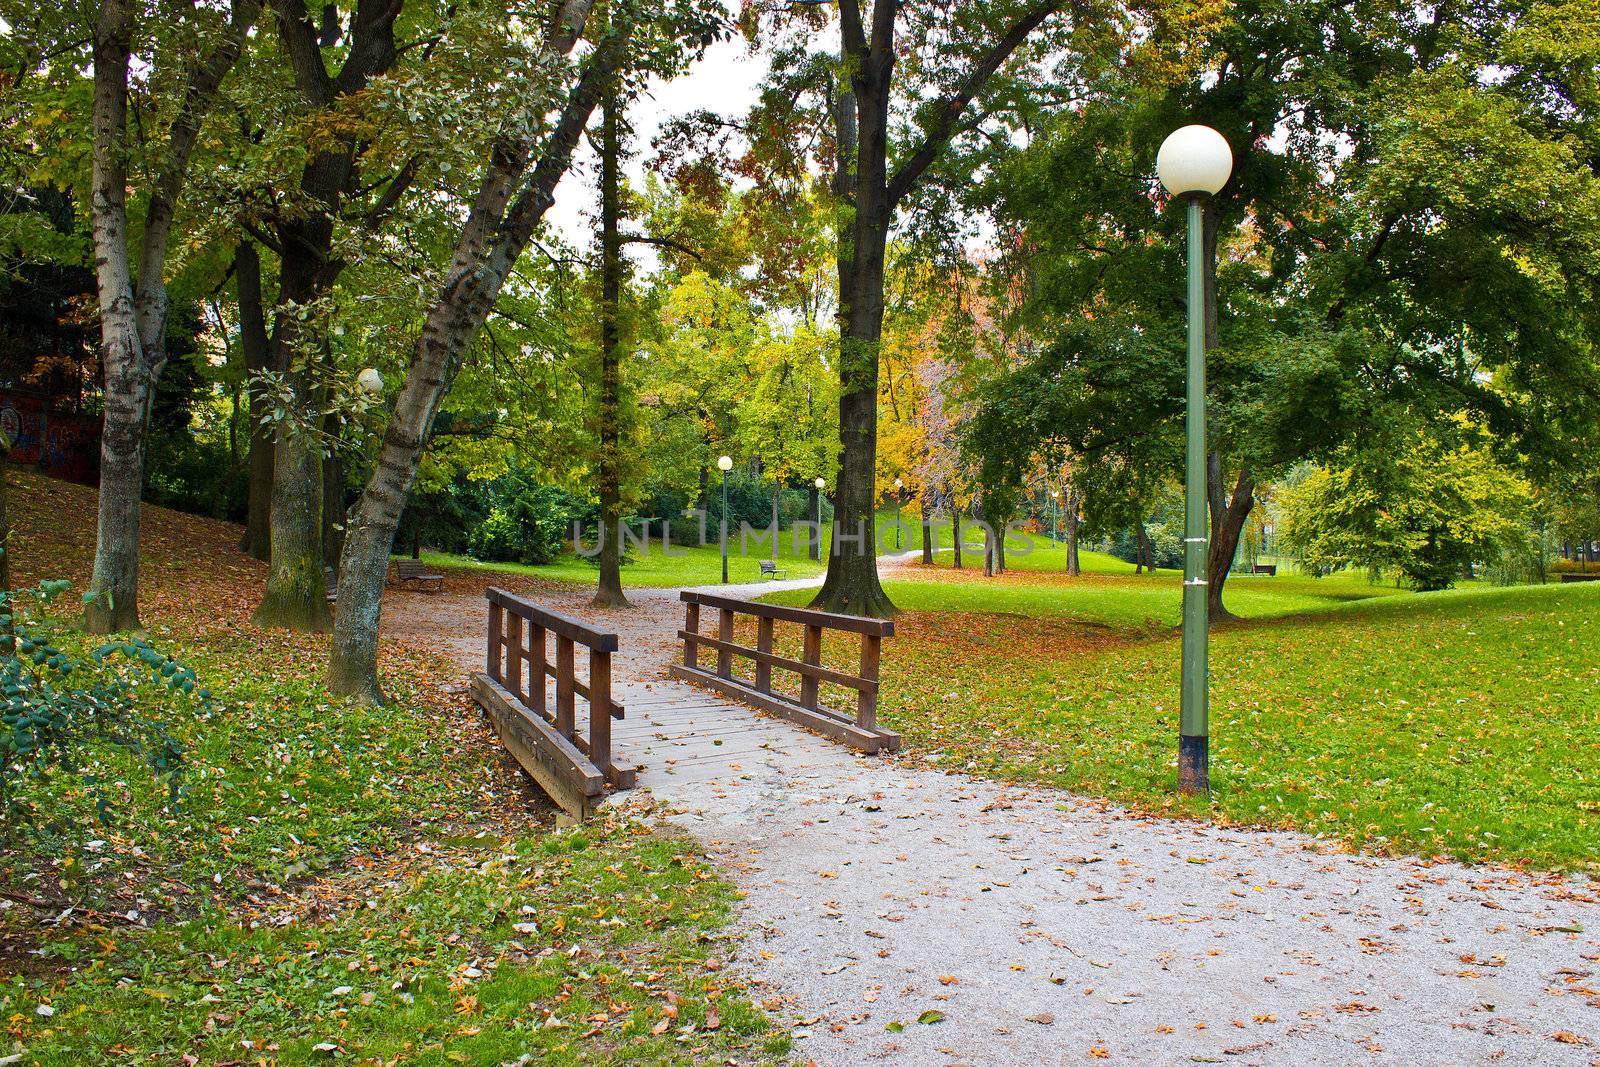 City of Zagreb park Ribnjak in autumn colors, Croatia